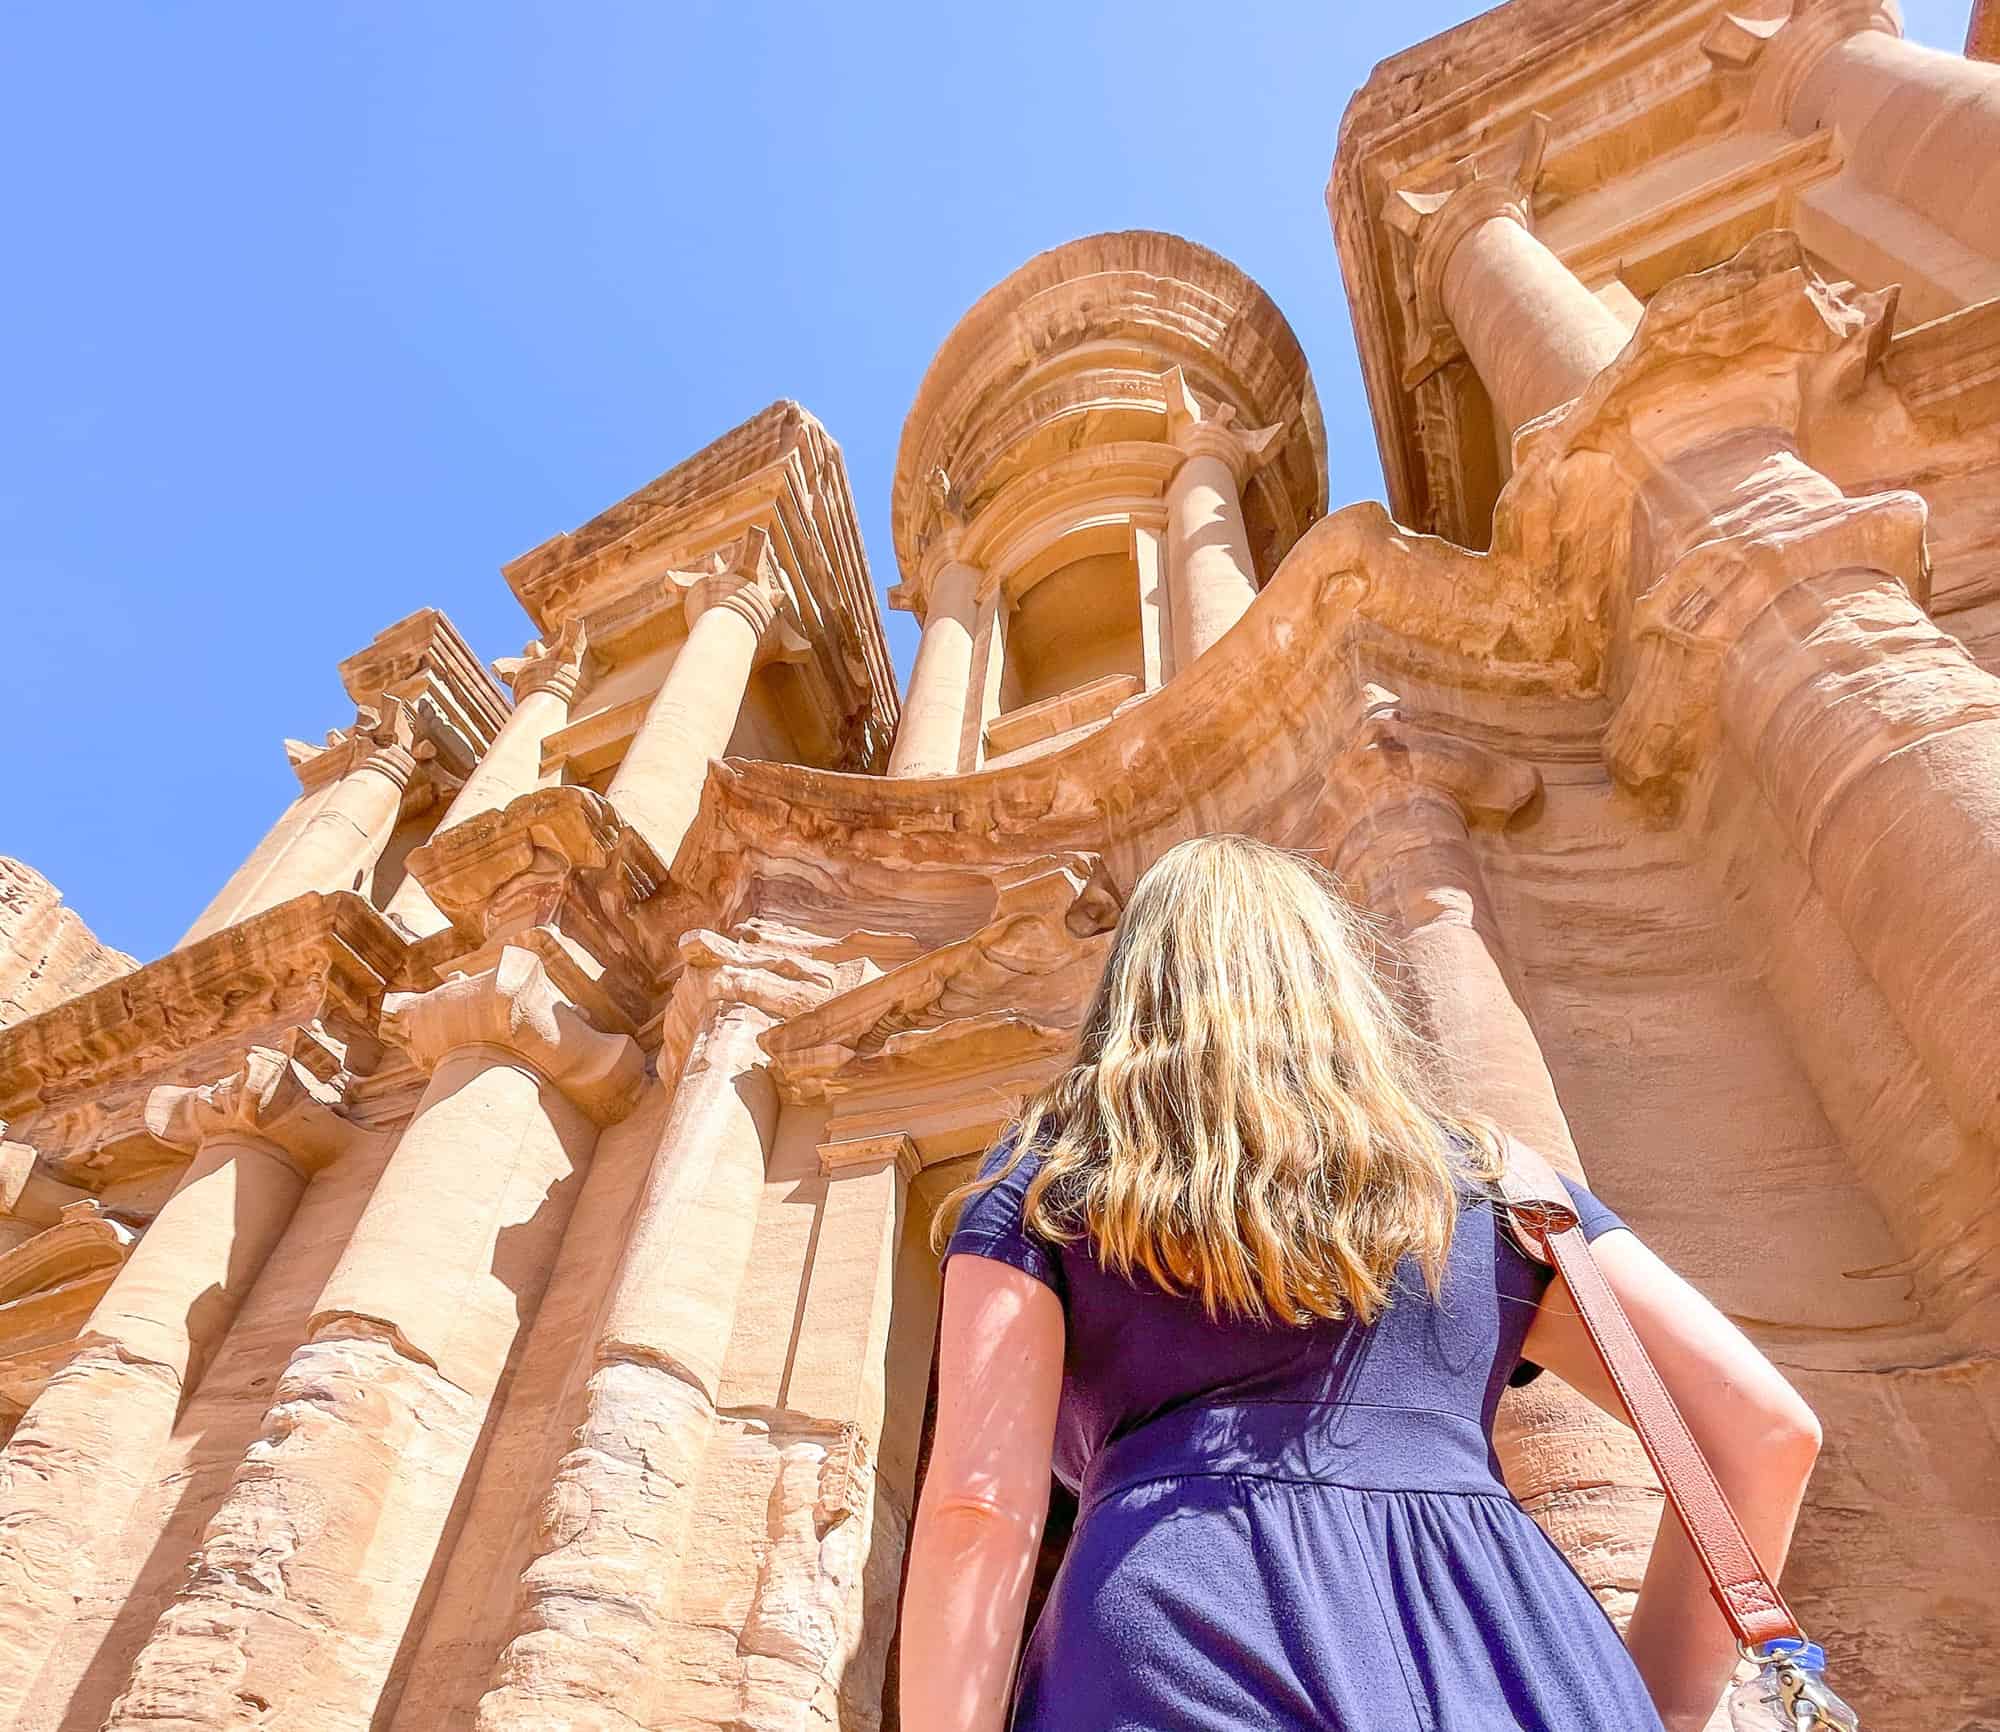 Jordan - Petra - Looking up at the Monastery